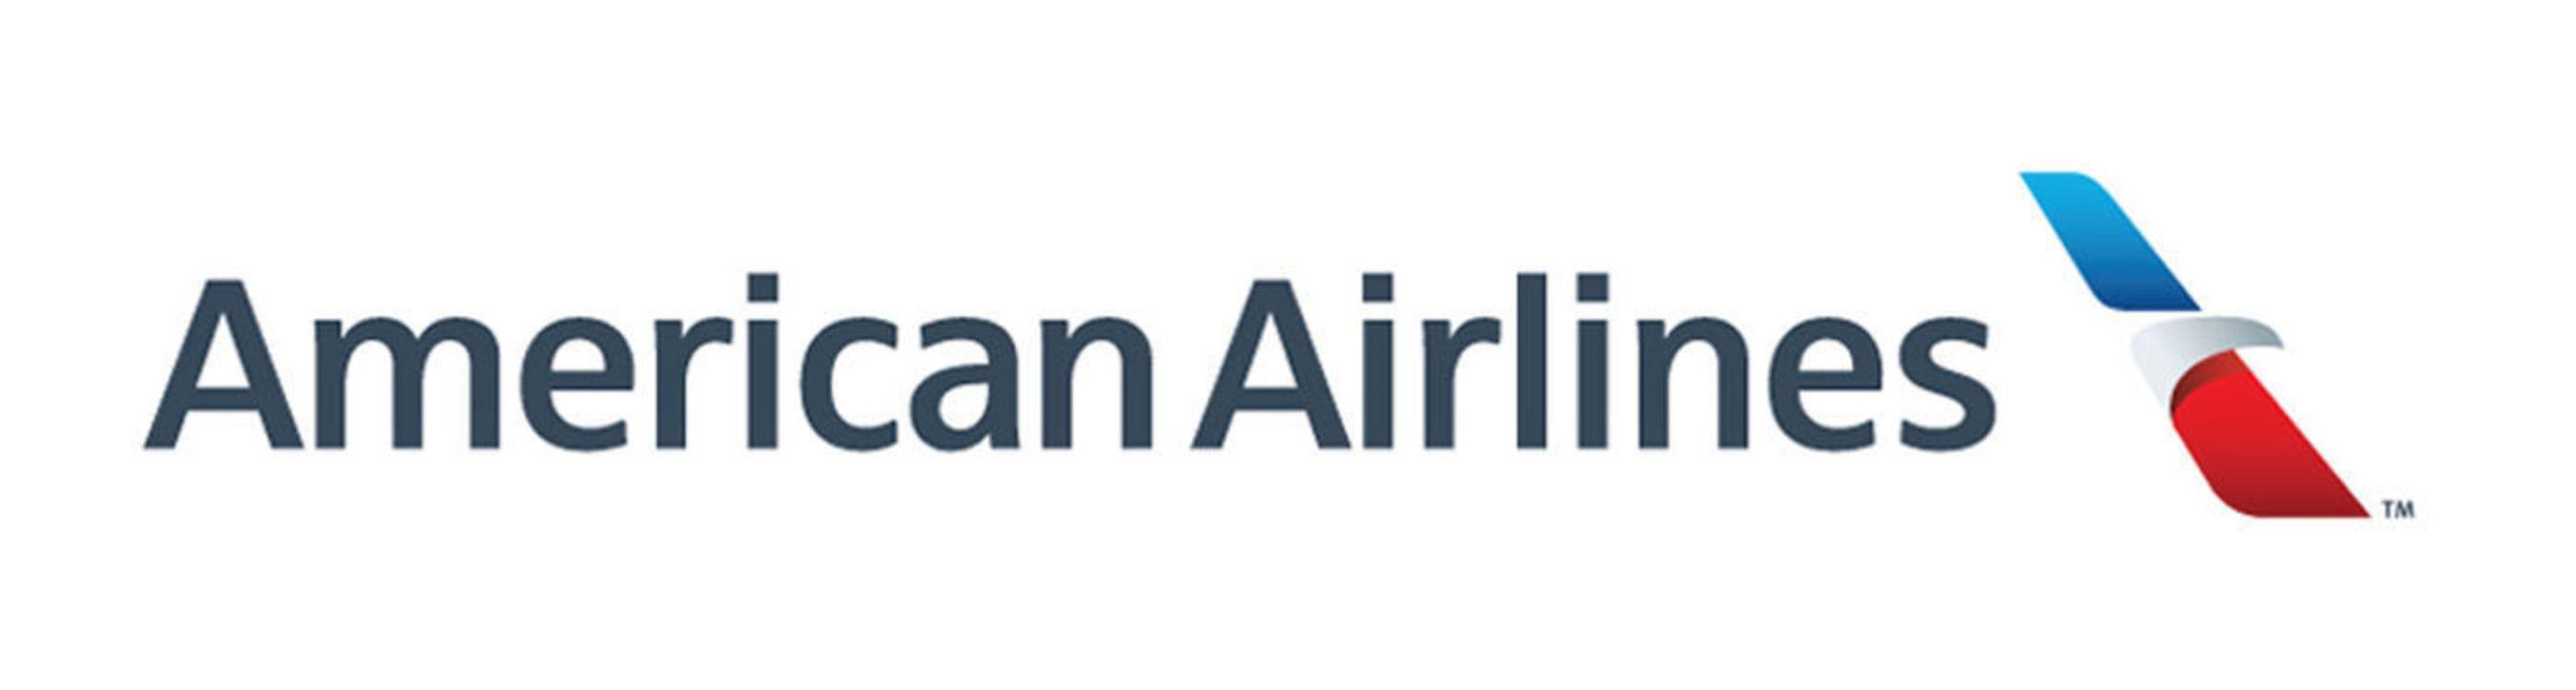 AAdvantage Logo - American Airlines Introduces The 2016 AAdvantage® Program